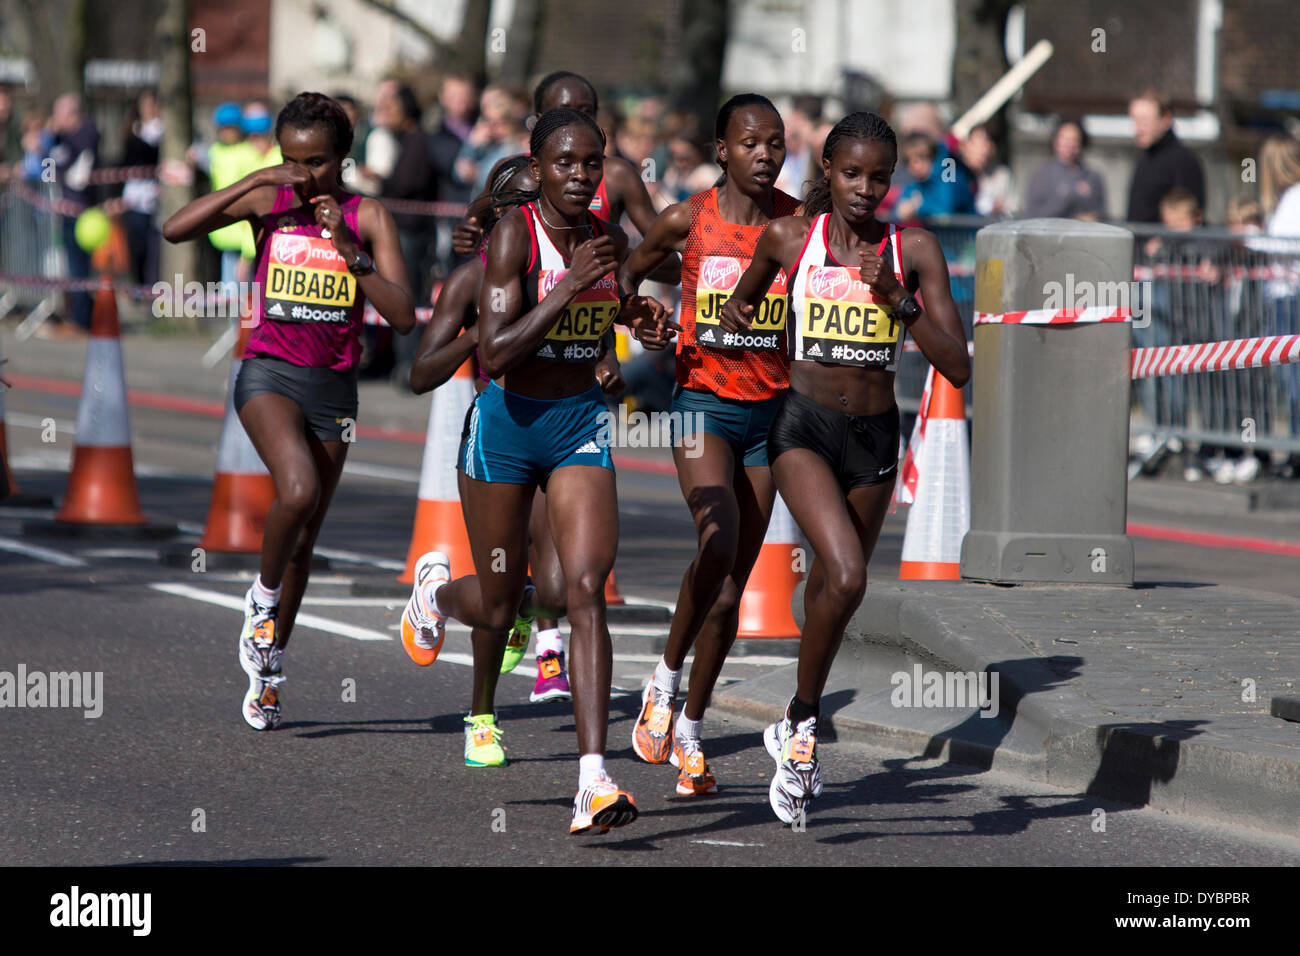 Londres, Royaume-Uni. 13 avr, 2014. 13 avril 2014. Virgin Money Marathon de Londres 2014, l'Autoroute, Londres, Royaume-Uni. Crédit : Simon Balson/Alamy Live News Banque D'Images